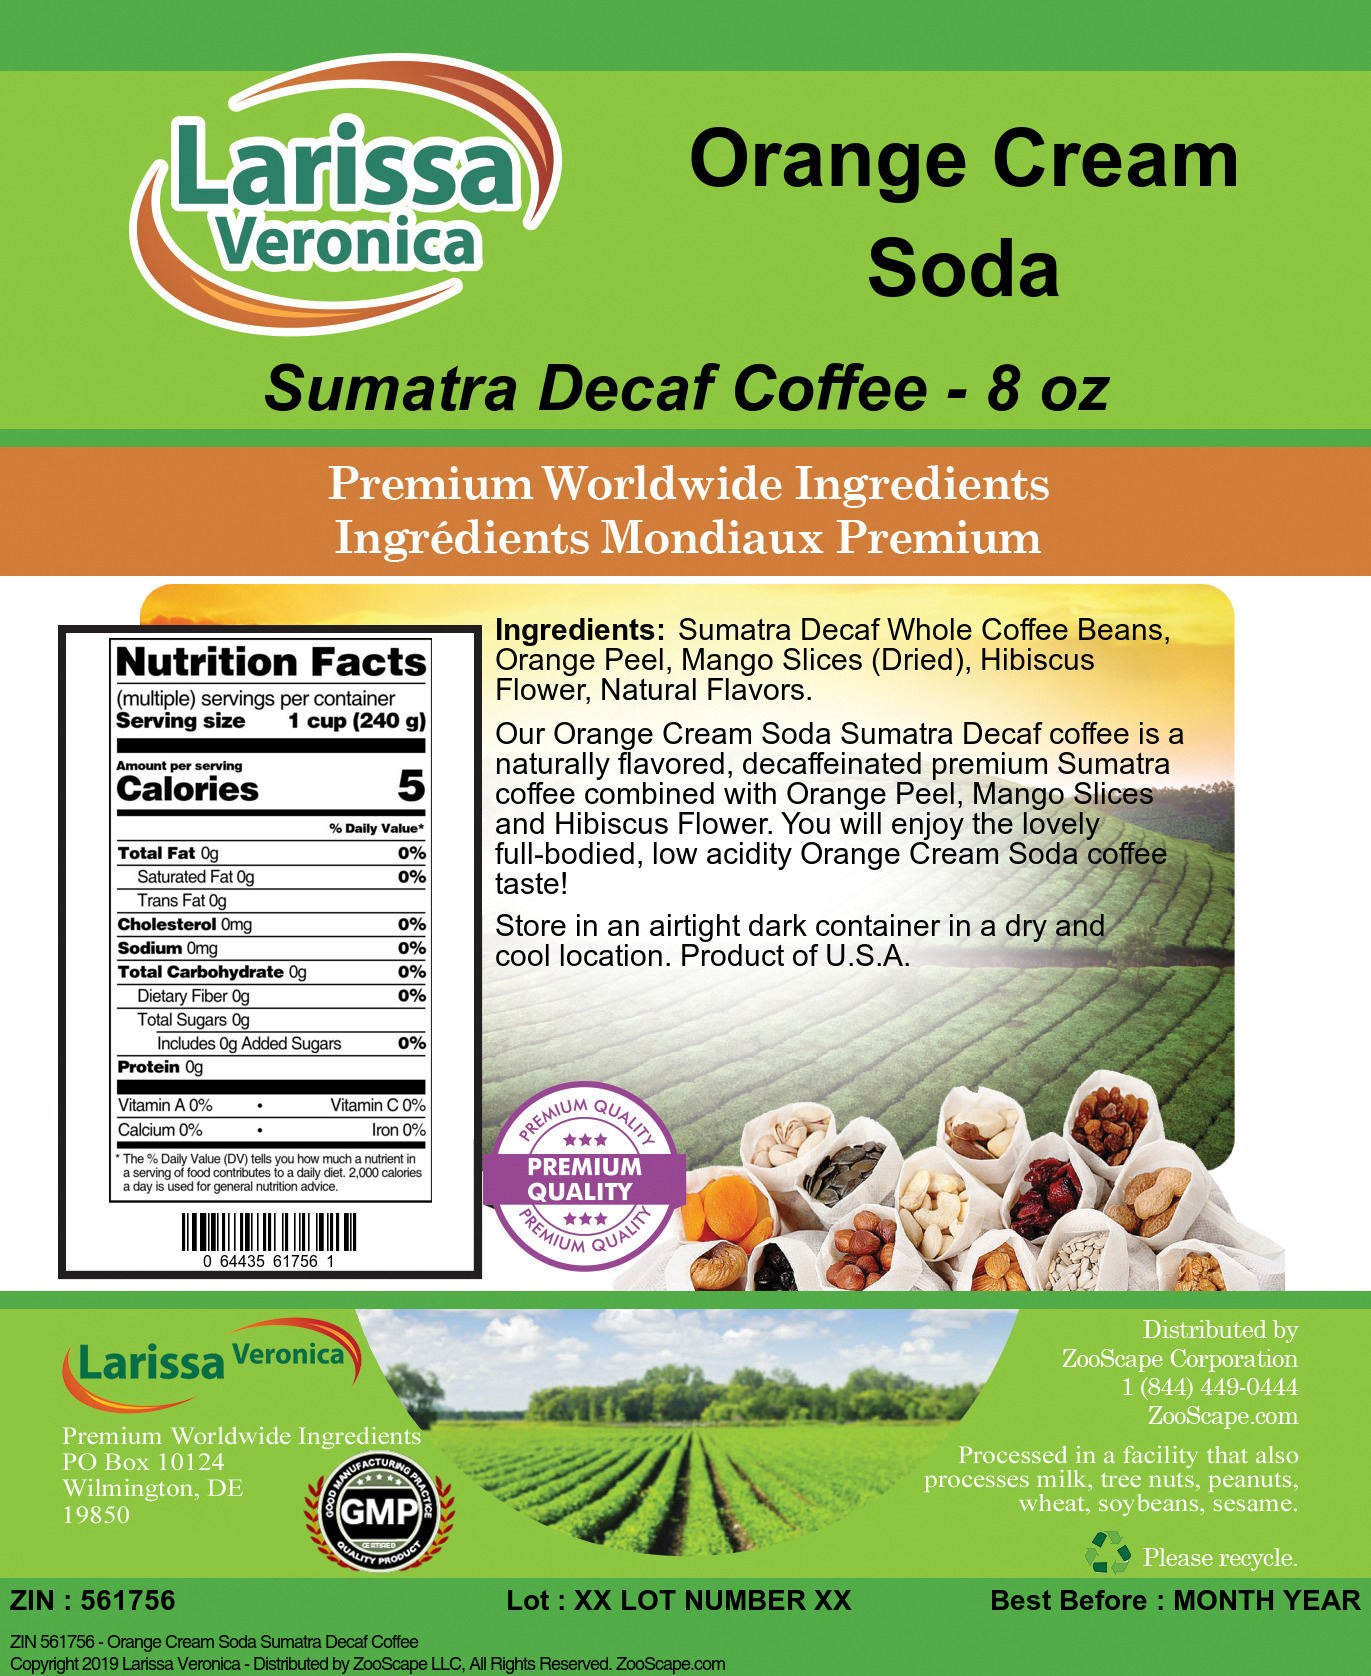 Orange Cream Soda Sumatra Decaf Coffee - Label